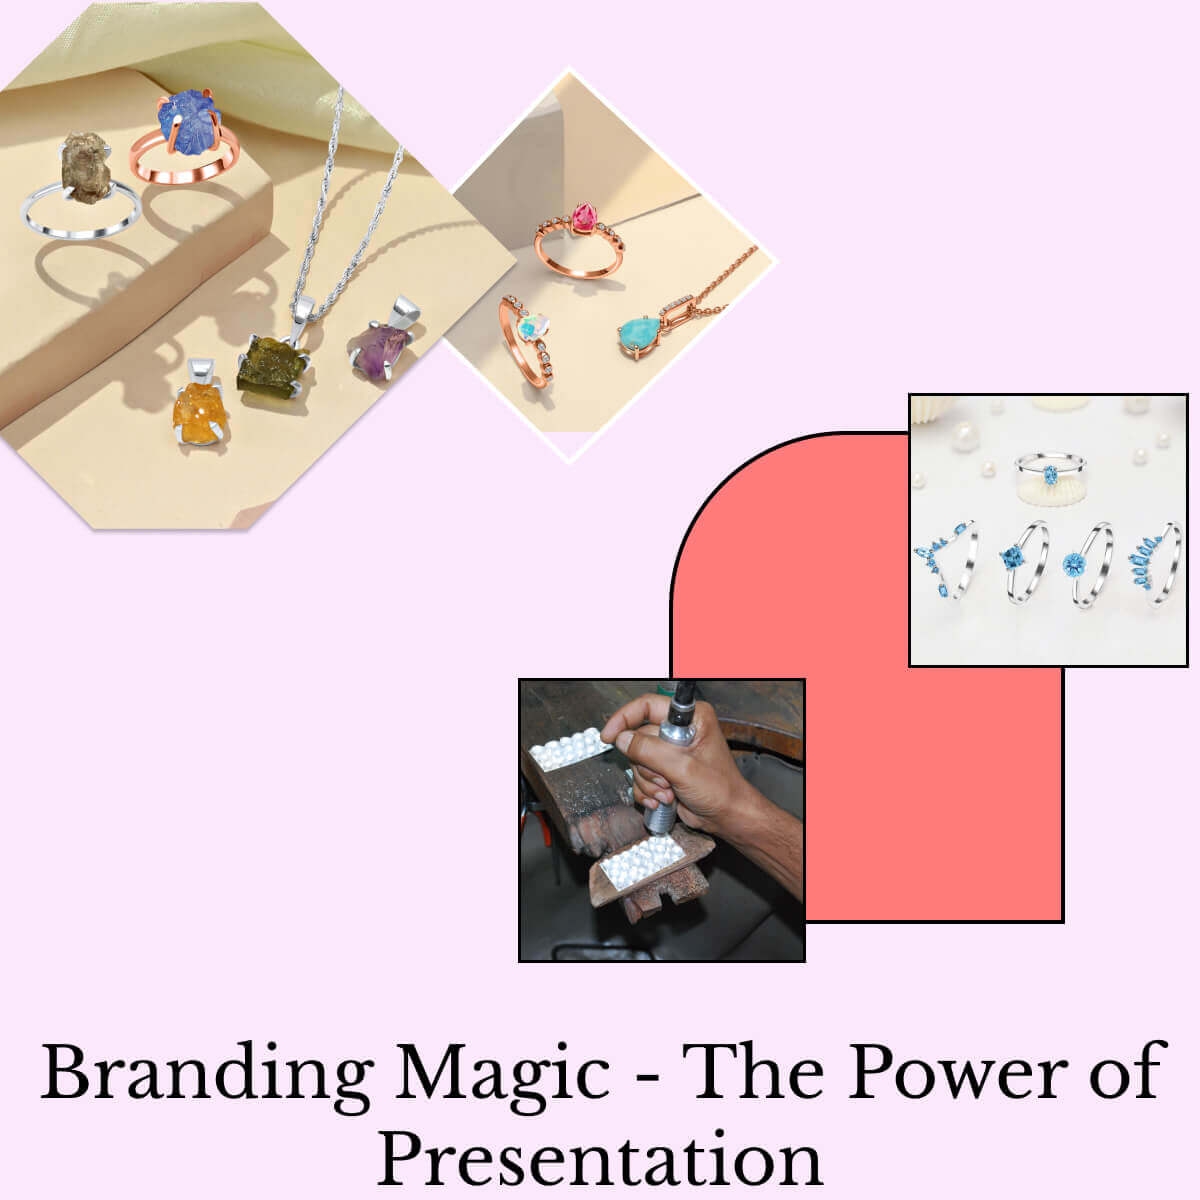 Presentation and Branding